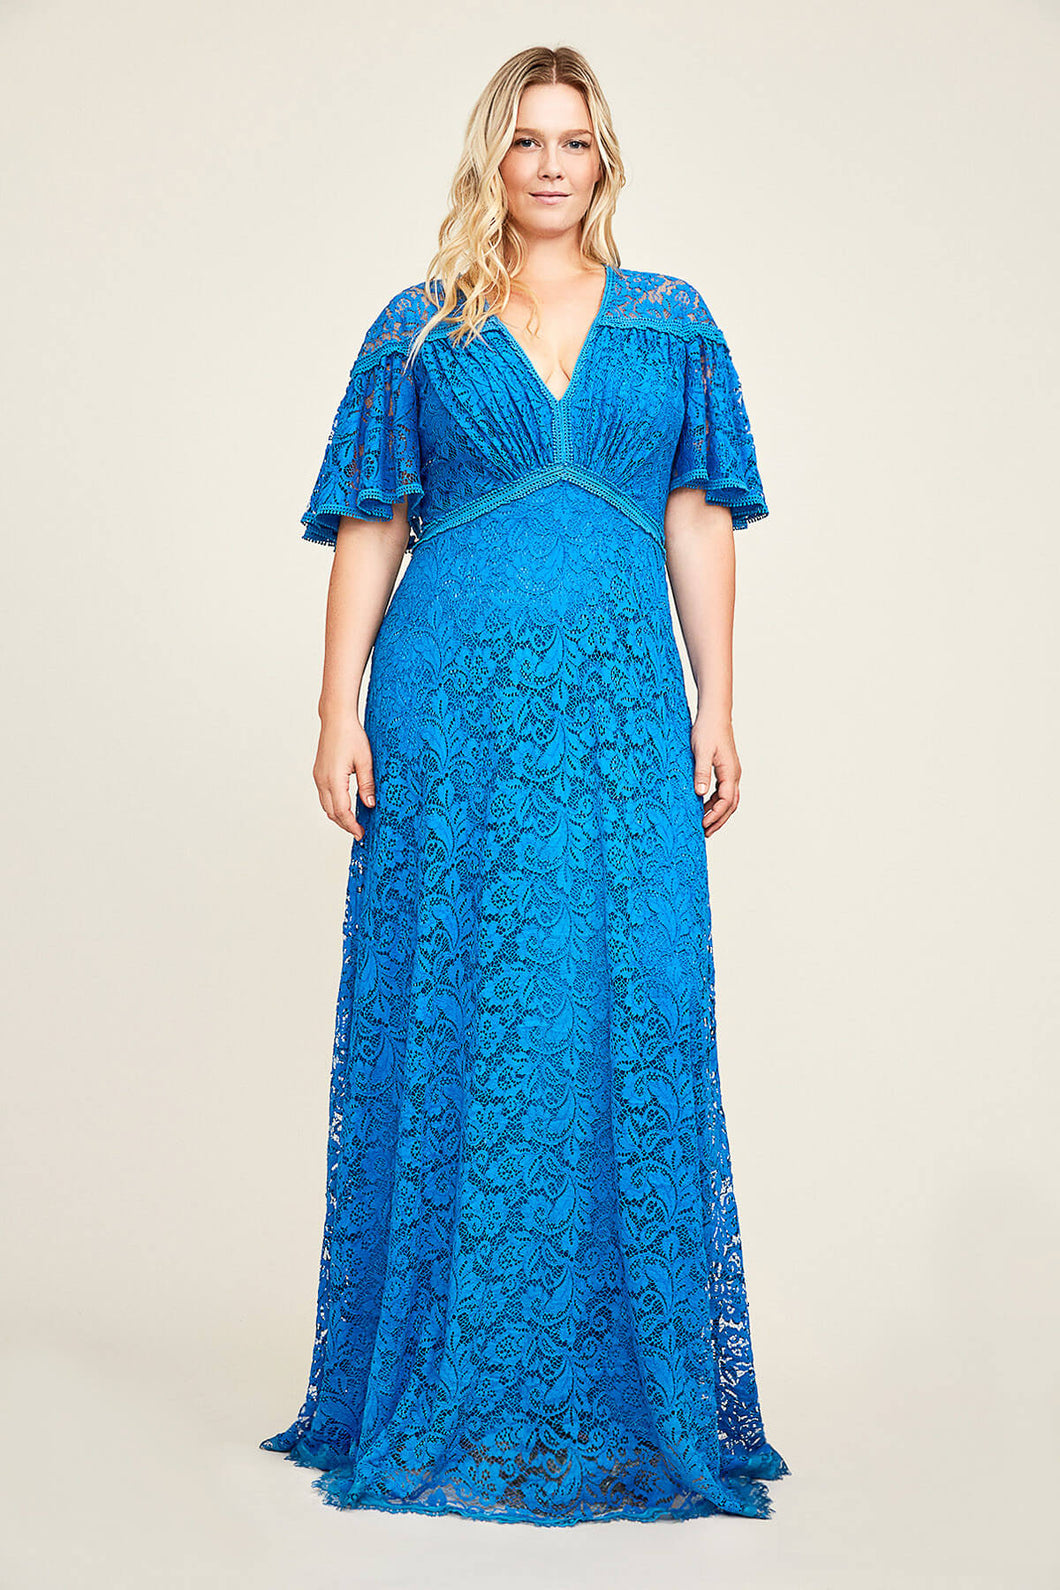 Tadashi Shoji Evening Lace Dress BBY18221LQ, Bright Blue, size 20Q, Plus size